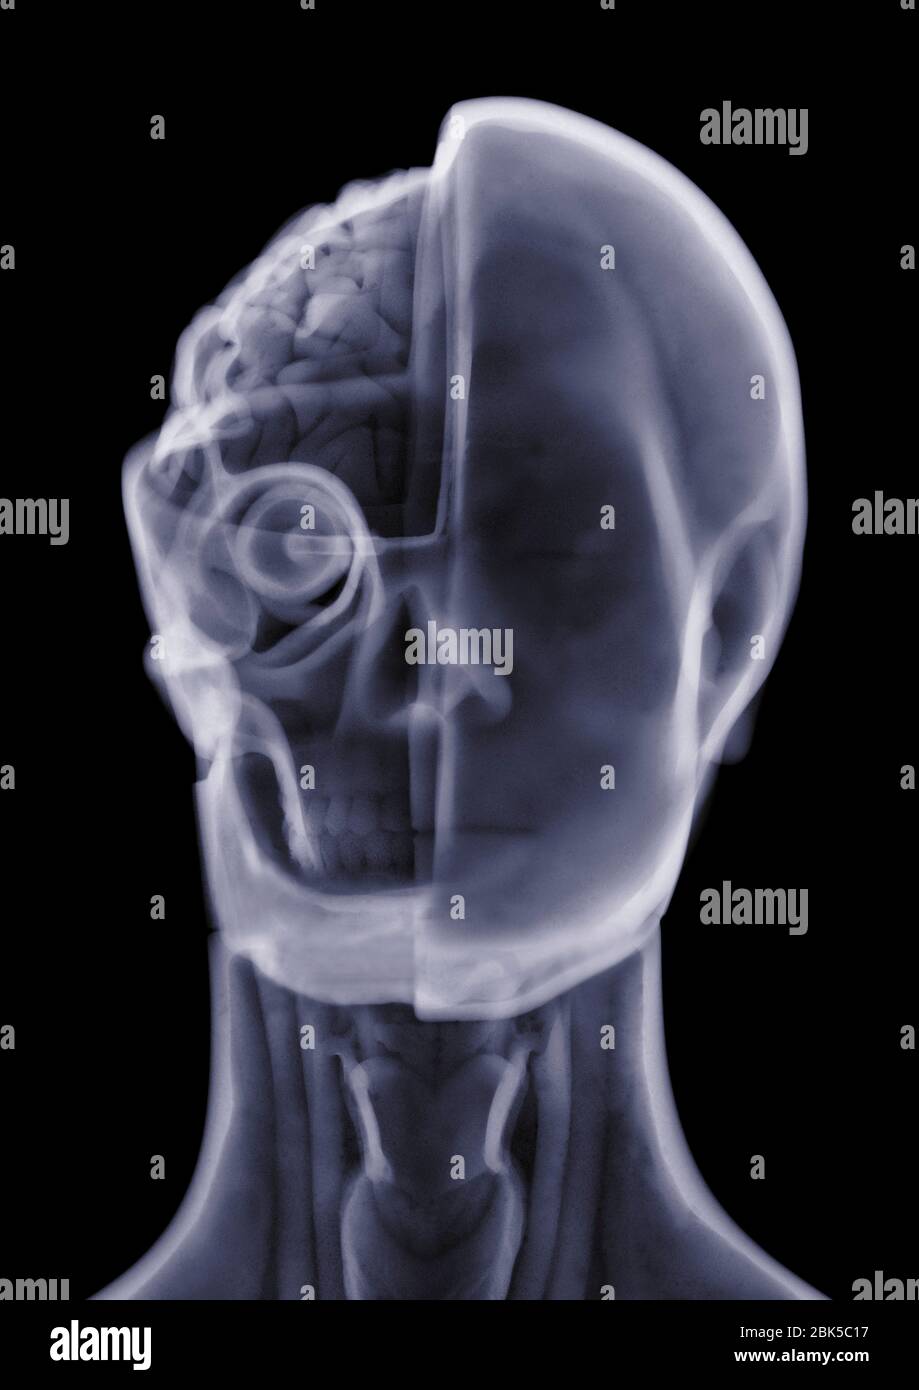 Anatomical model, X-ray. Stock Photo